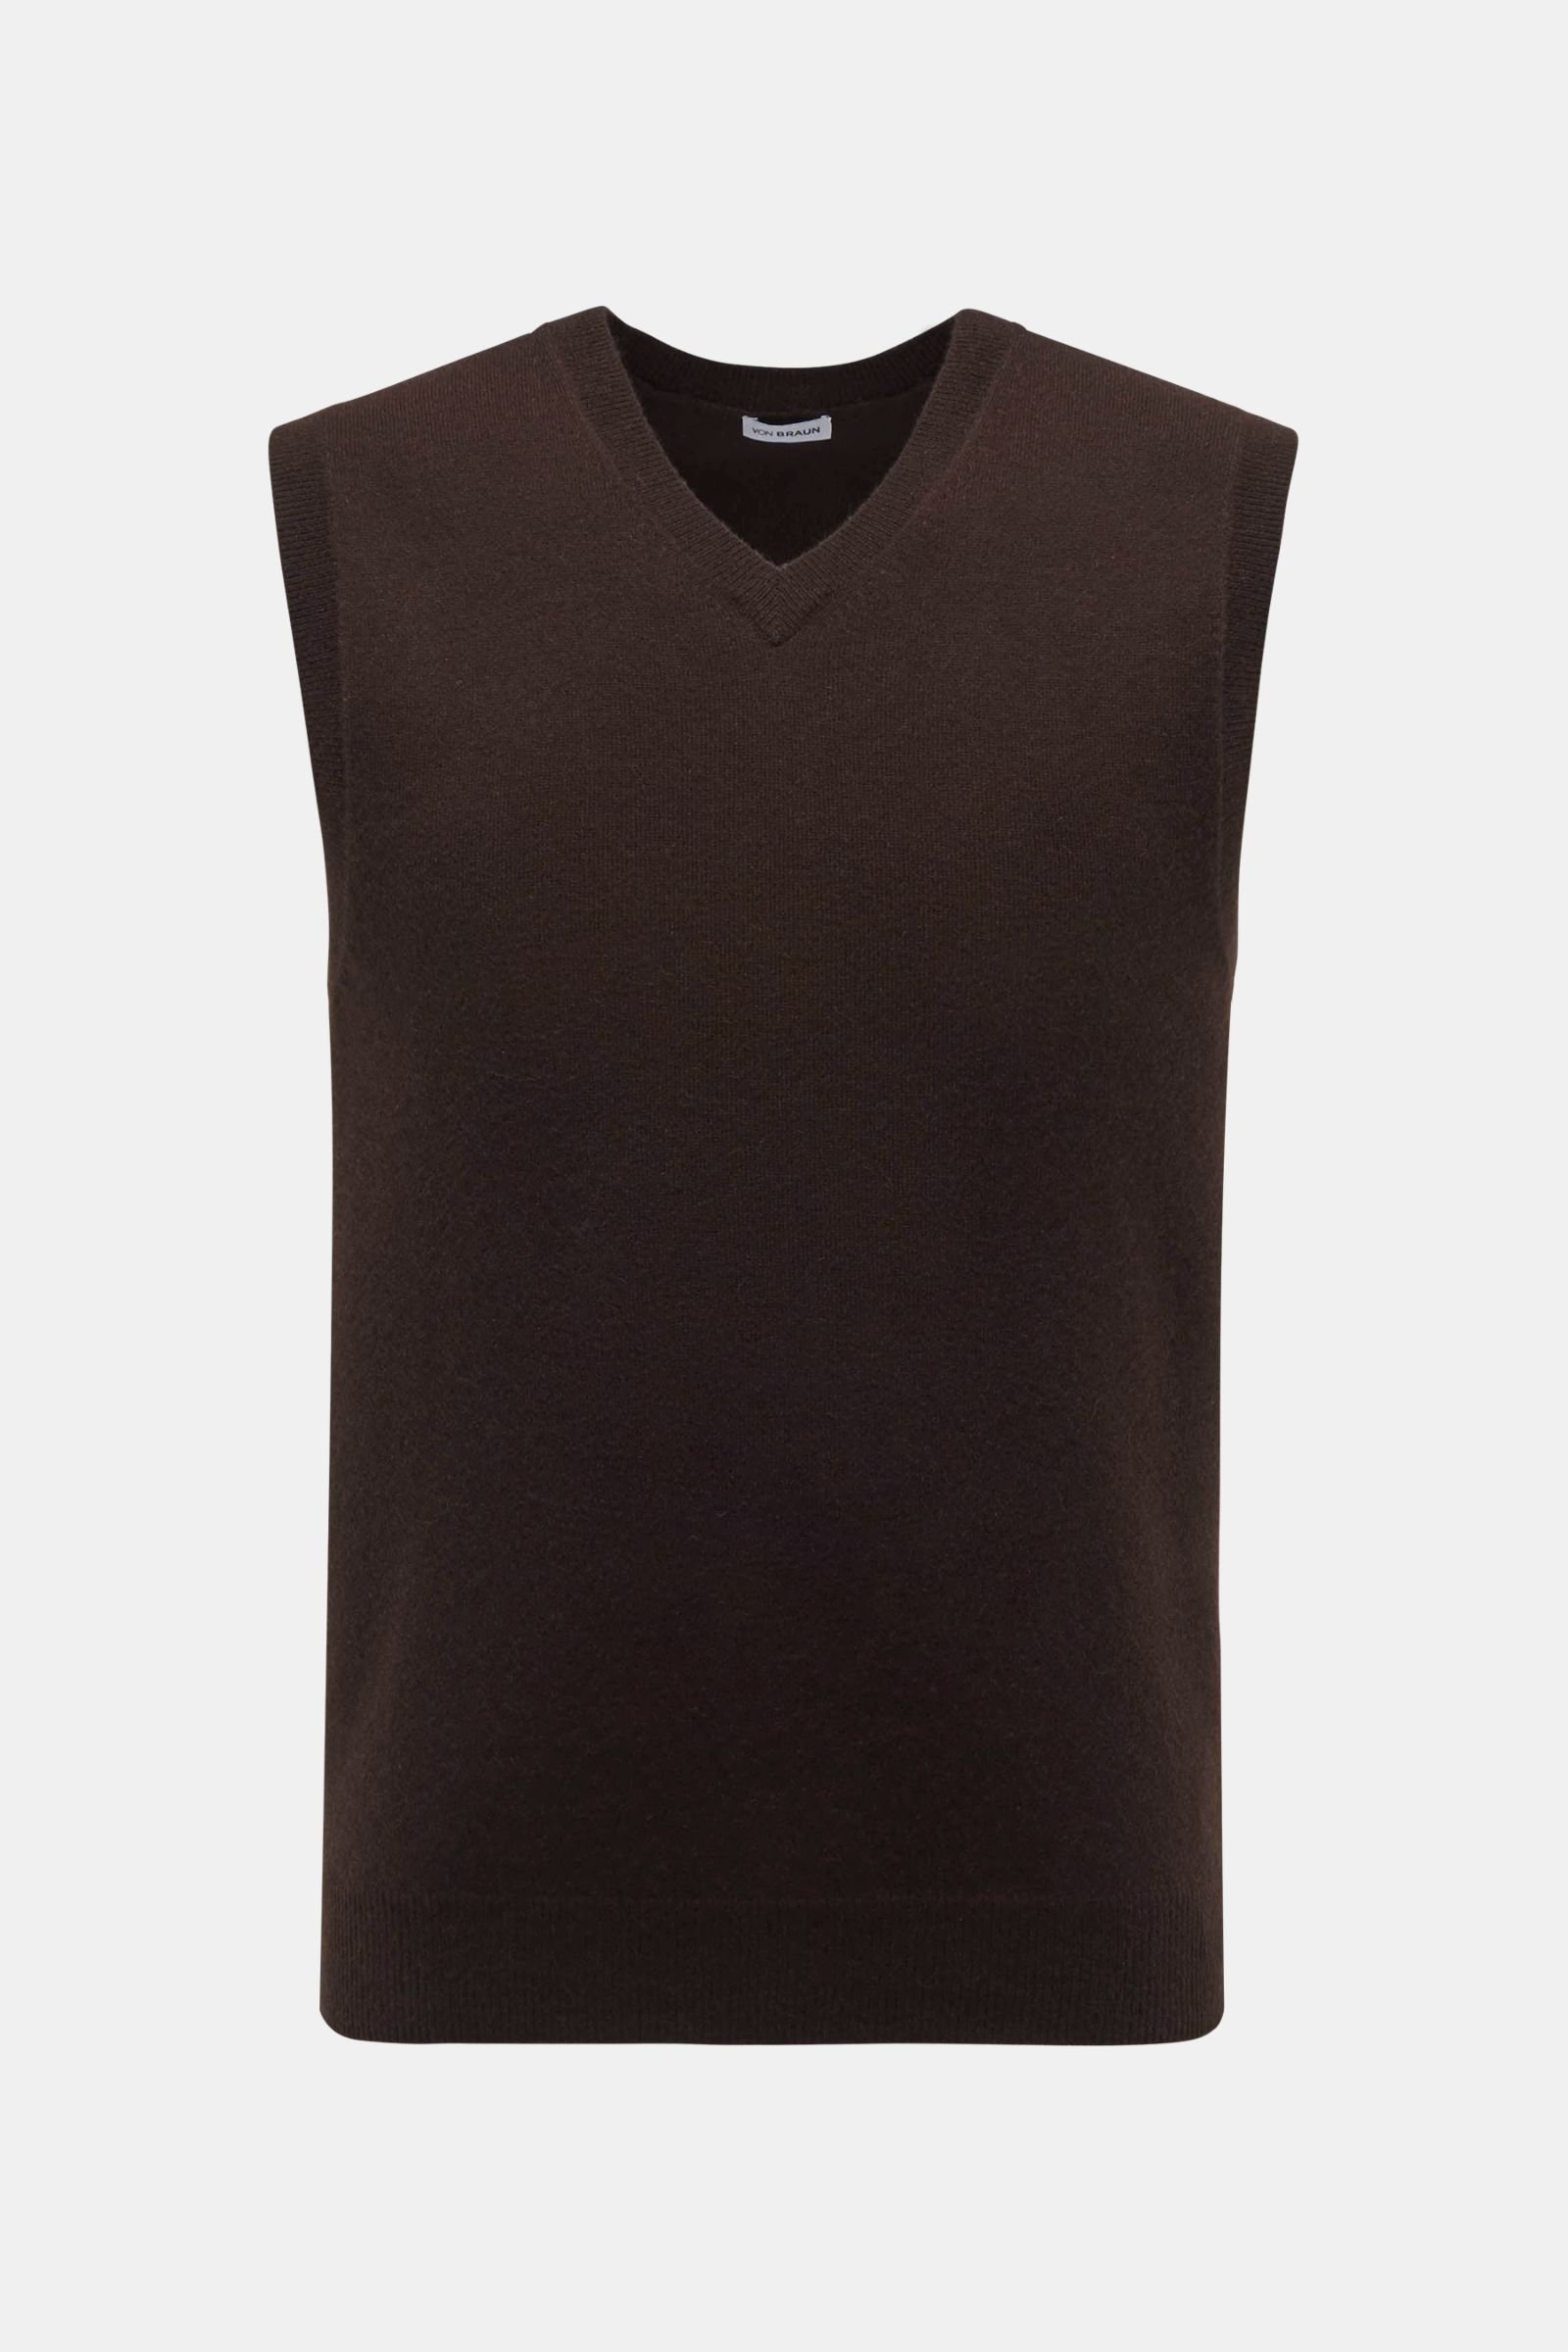 Cashmere V-neck sweater vest dark brown